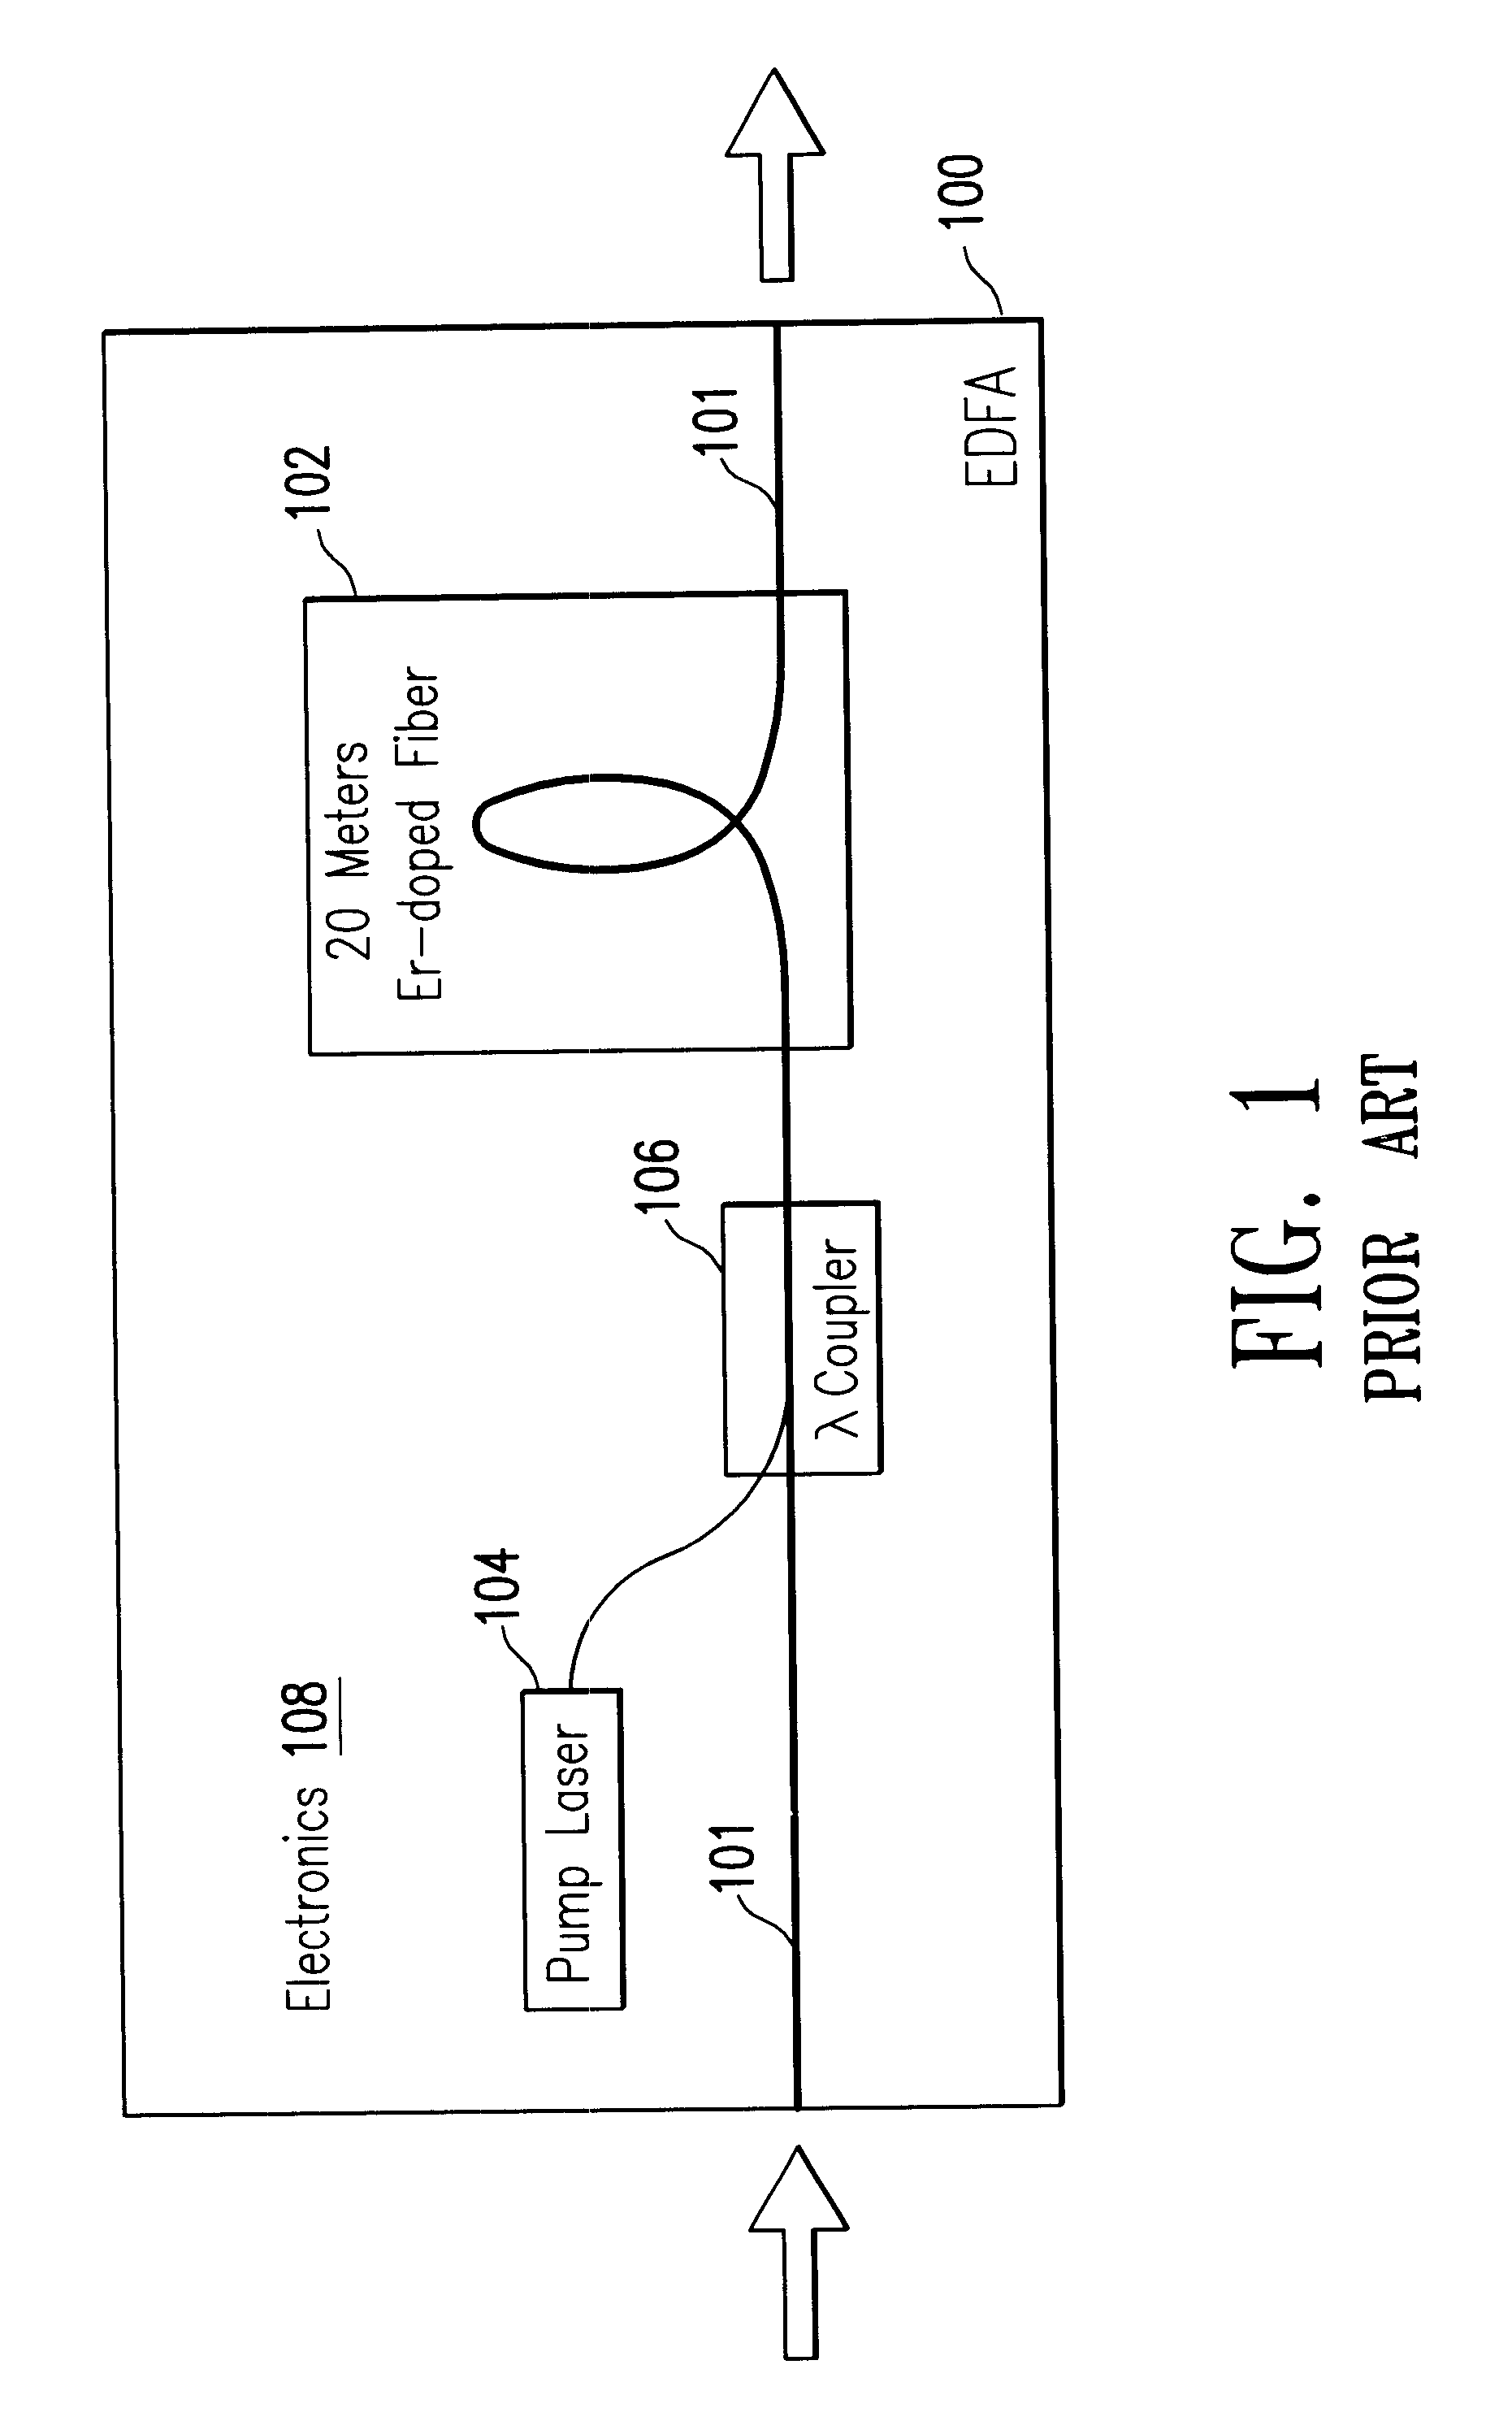 Optical signal power monitor and regulator